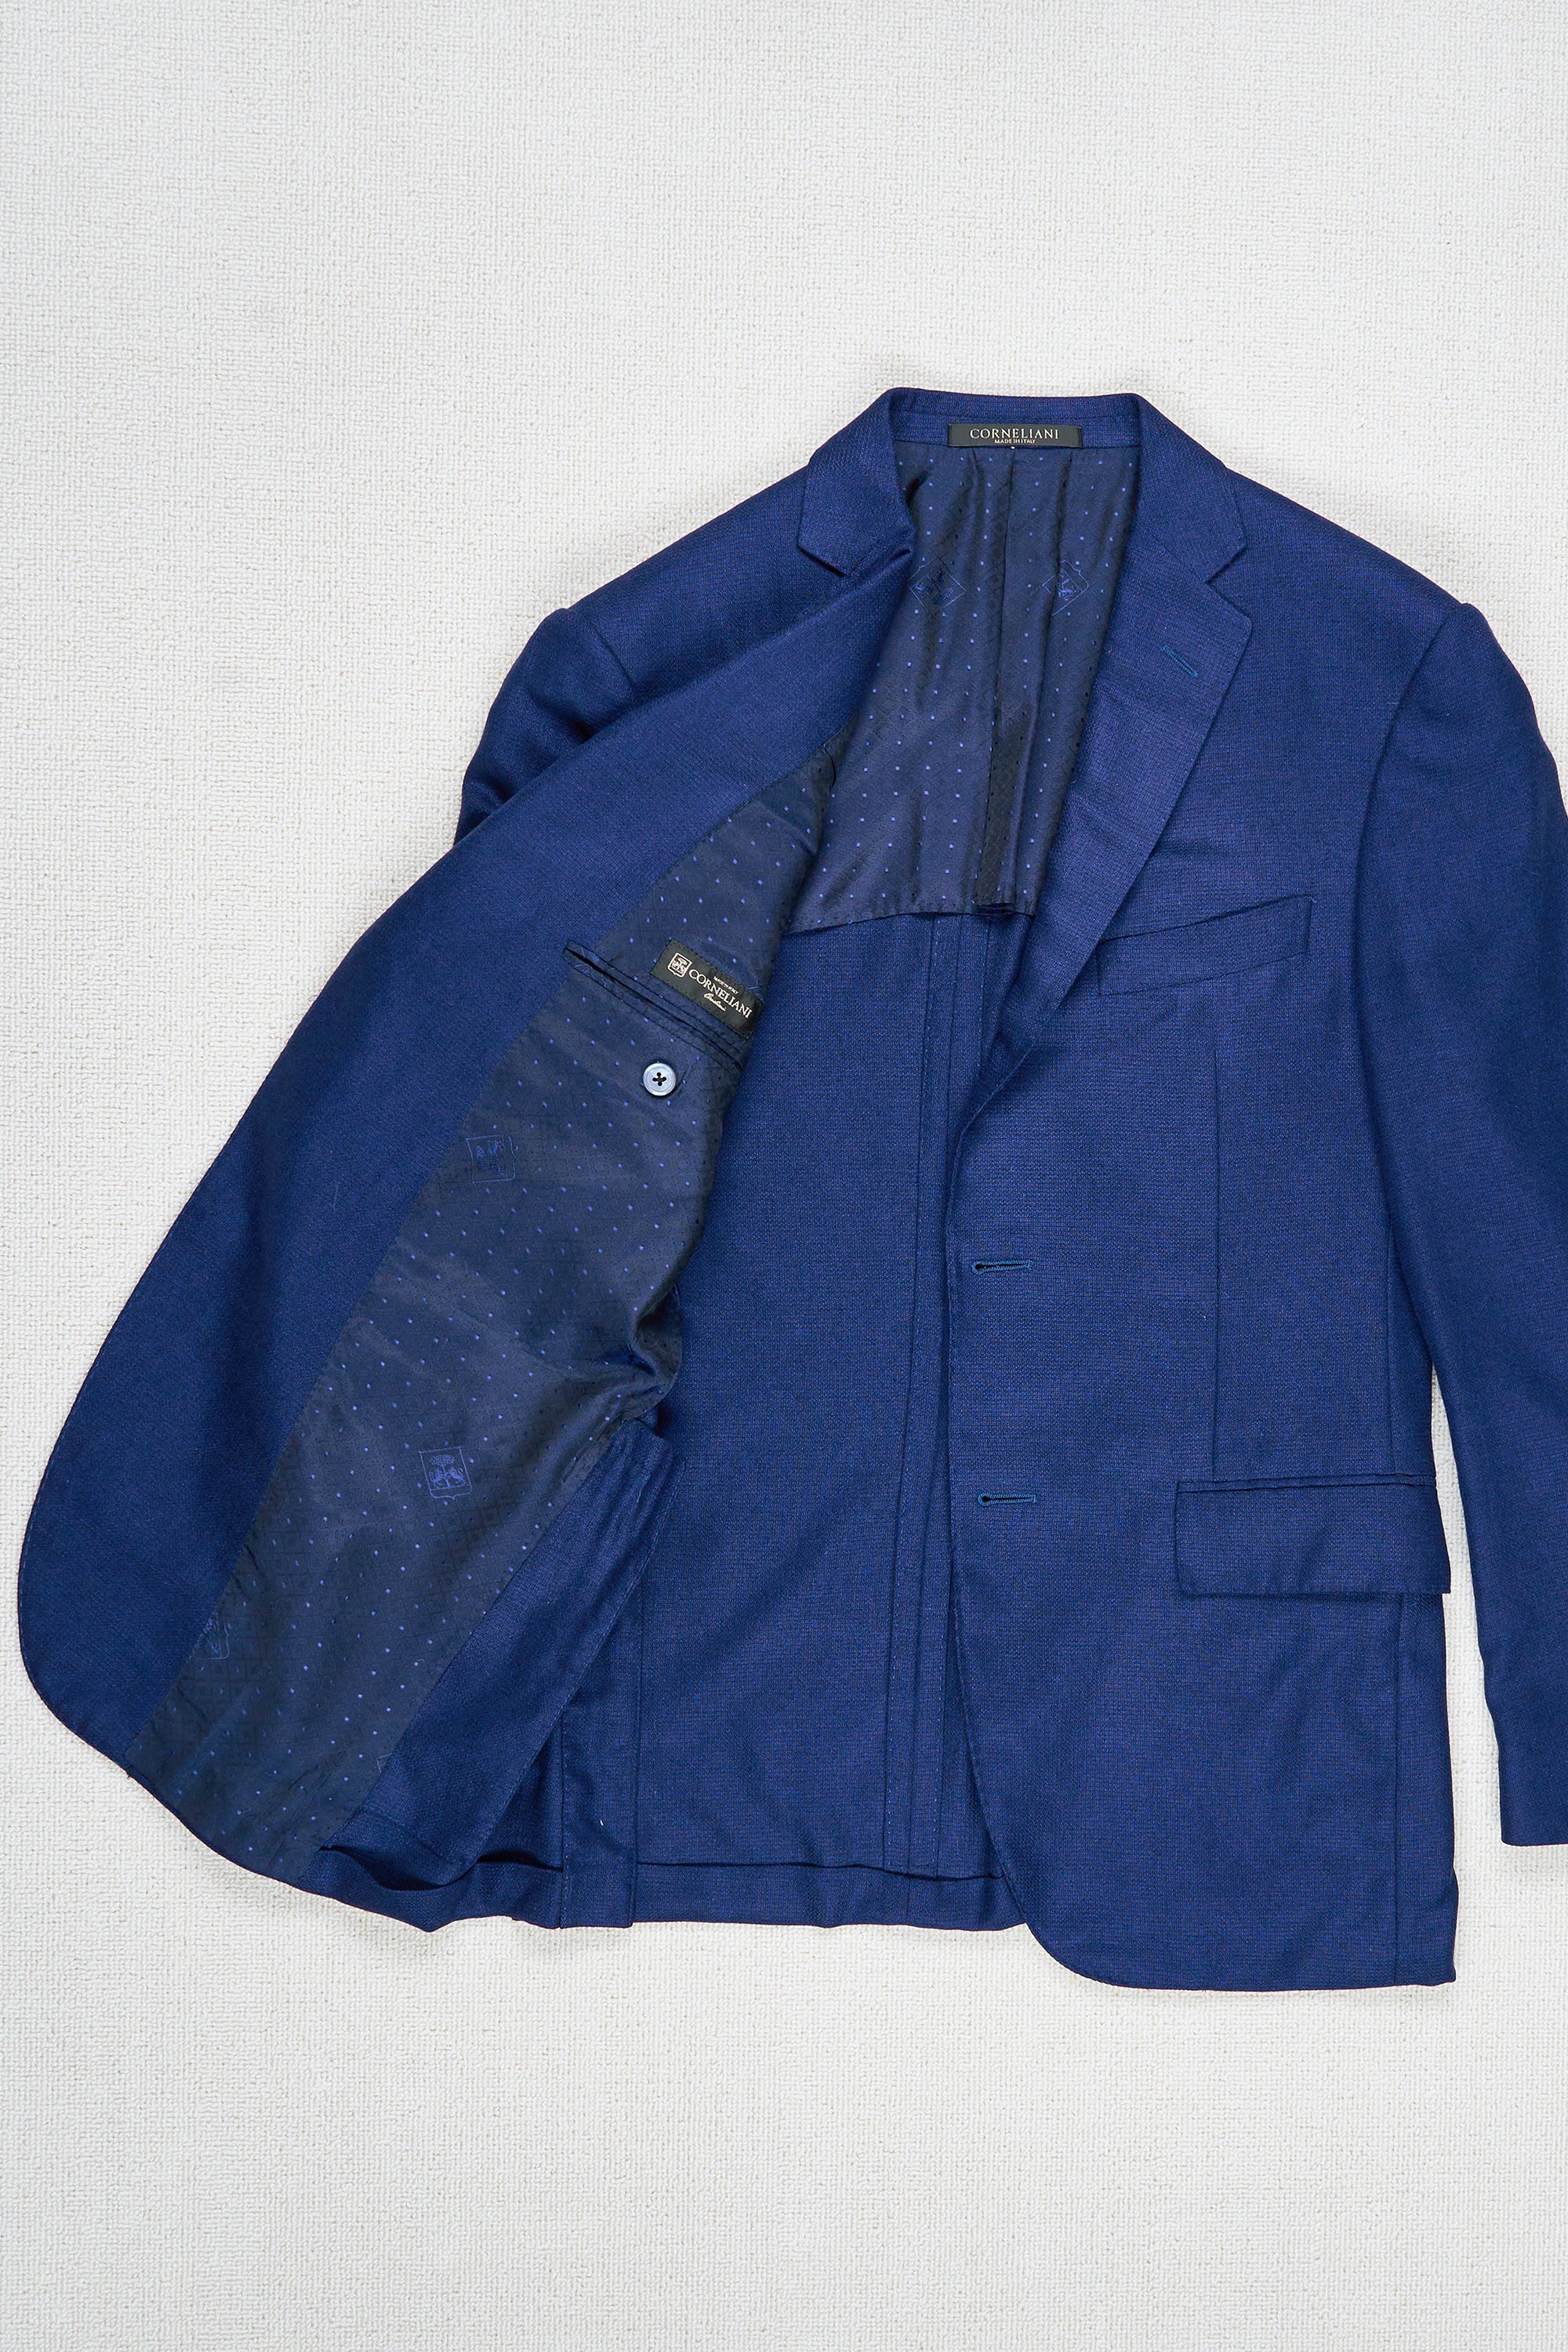 Corneliani Blue Silk/Cashmere Sport Coat